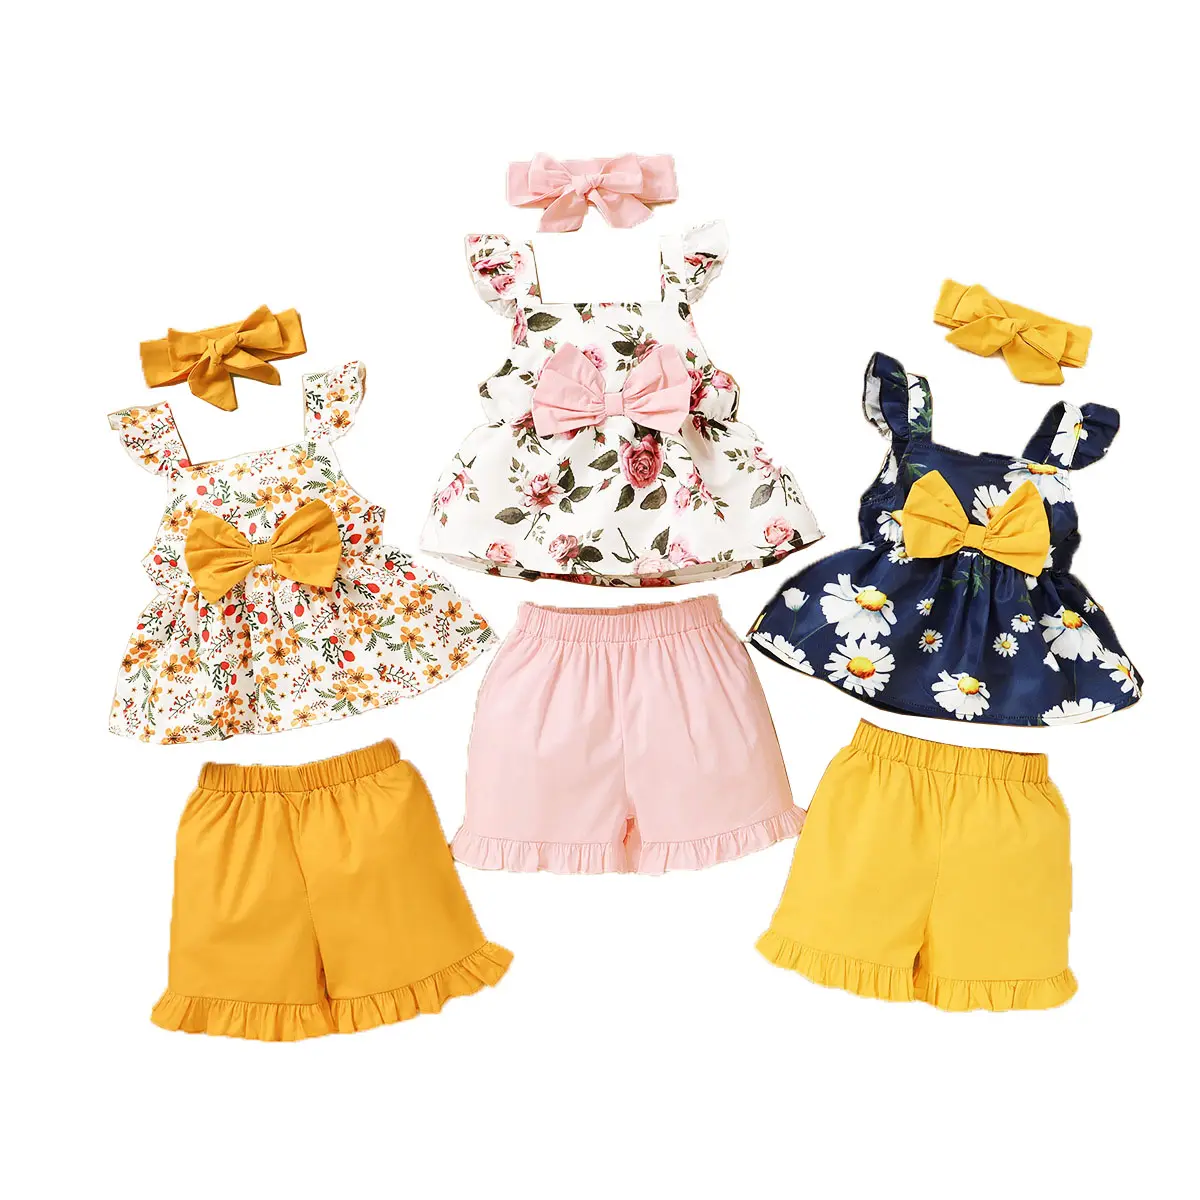 Set Pakaian Musim Panas Anak Perempuan, Tiga Potong Atasan Selempang Lengan Terbang Simpul Kupu-kupu + Celana Pendek Warna Polos + Set Pakaian Musim Panas untuk Perempuan